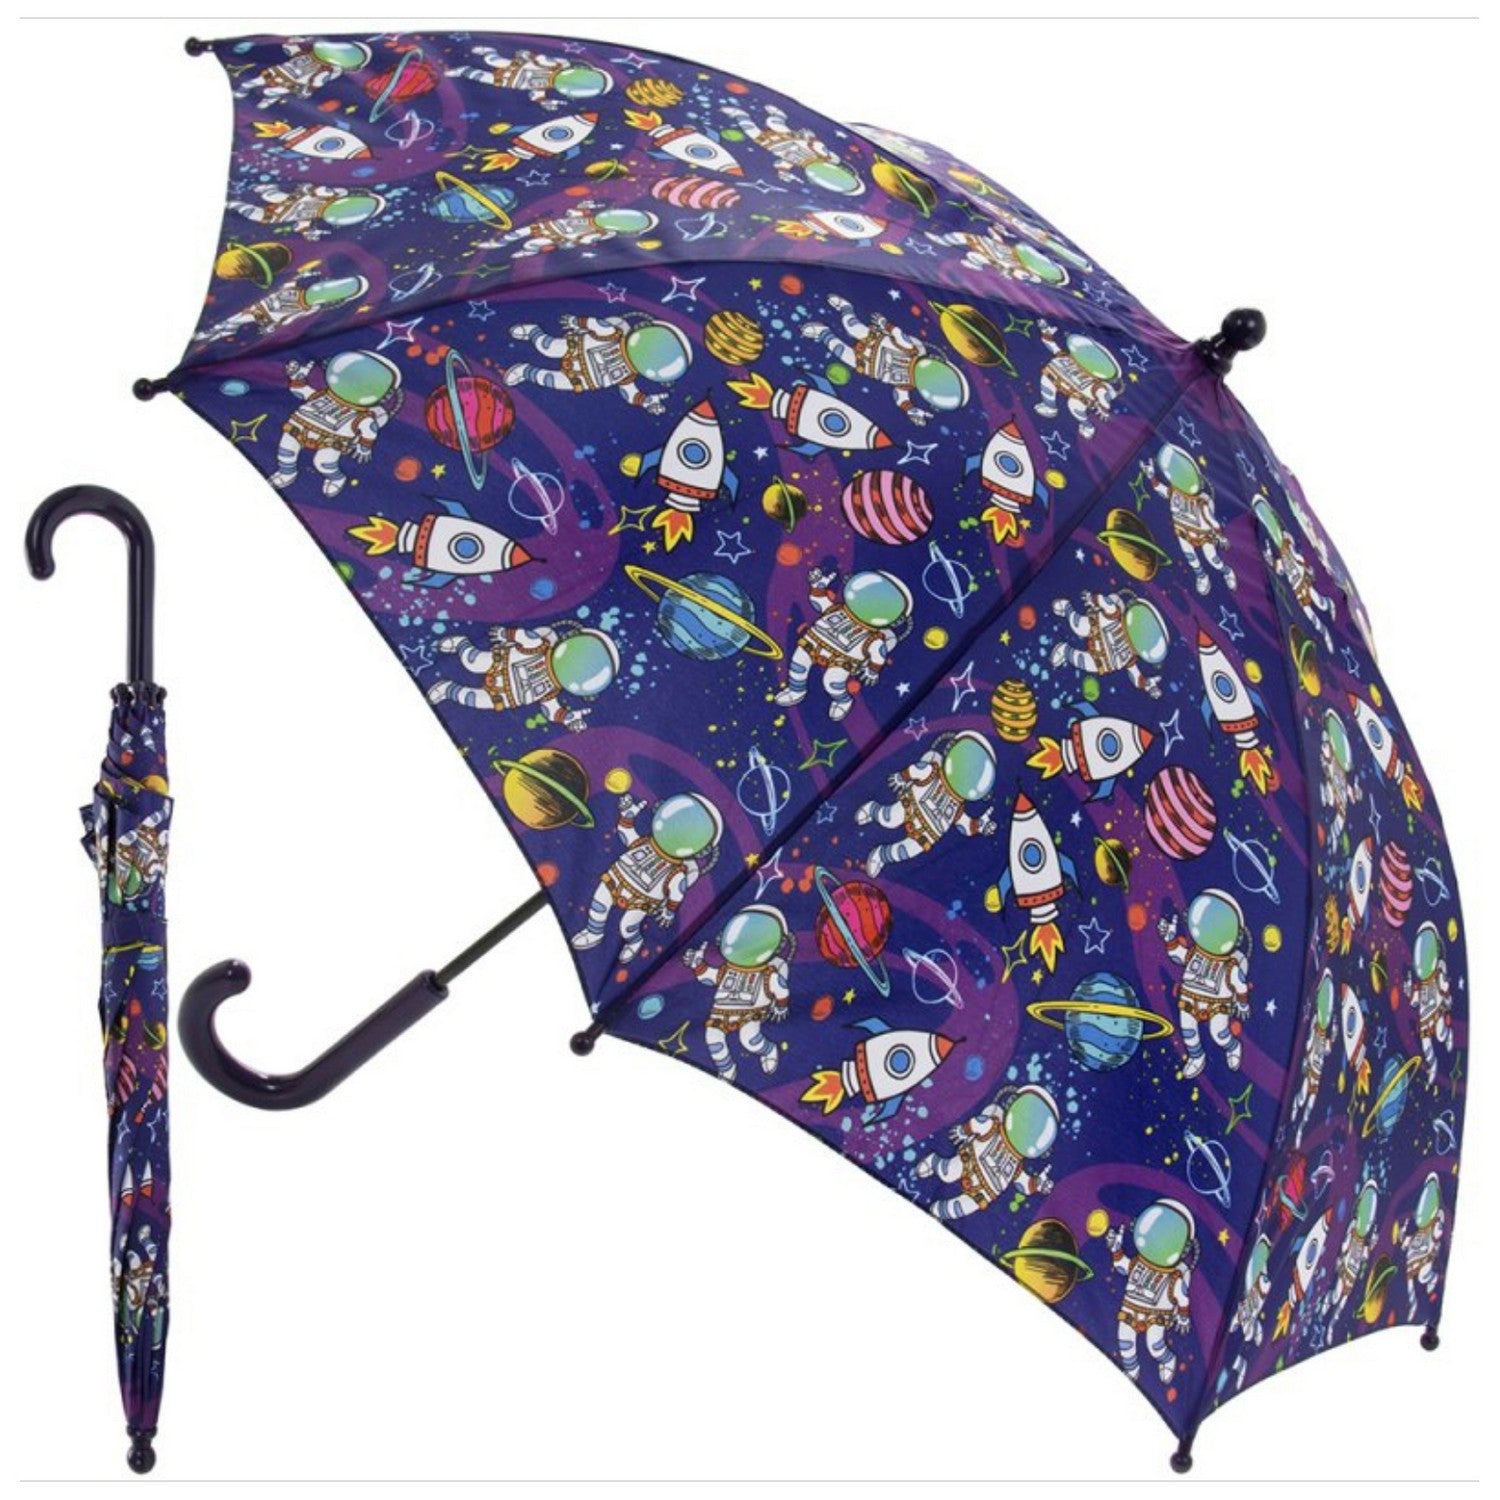 Spaceman Design Kids Umbrella